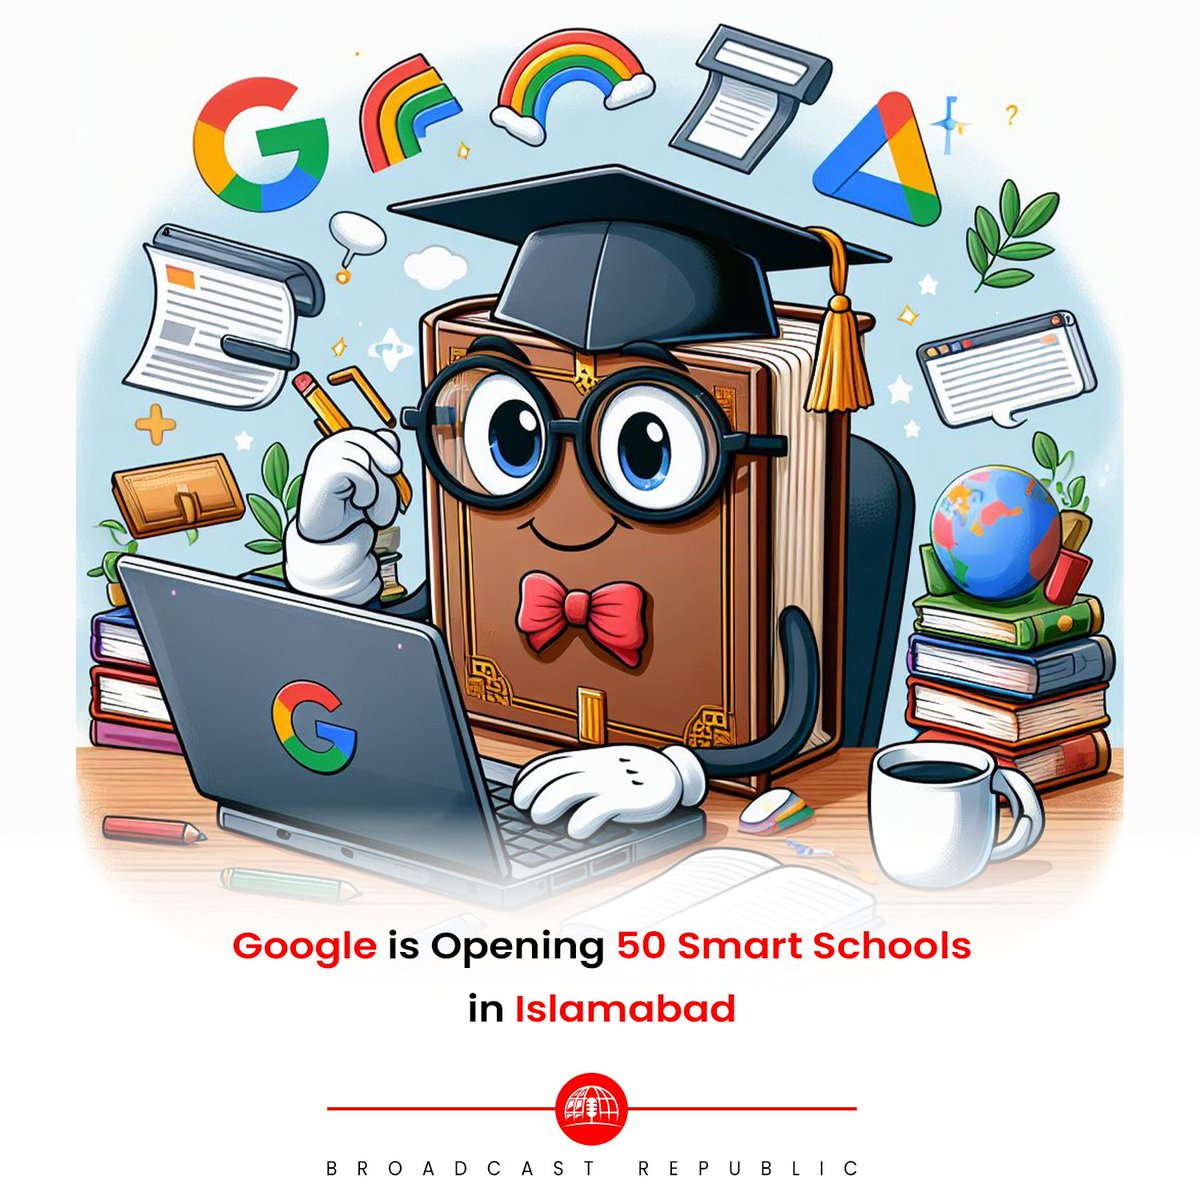 Google, in collaboration with Tech Valley, is set to establish 50 smart schools in Islamabad, Pakistan. #BroadcastRepublic #Google #SmartSchools #Education #Pakistan #Equality #Empowerment 🌐 Read More: Broadcastrepublic.com